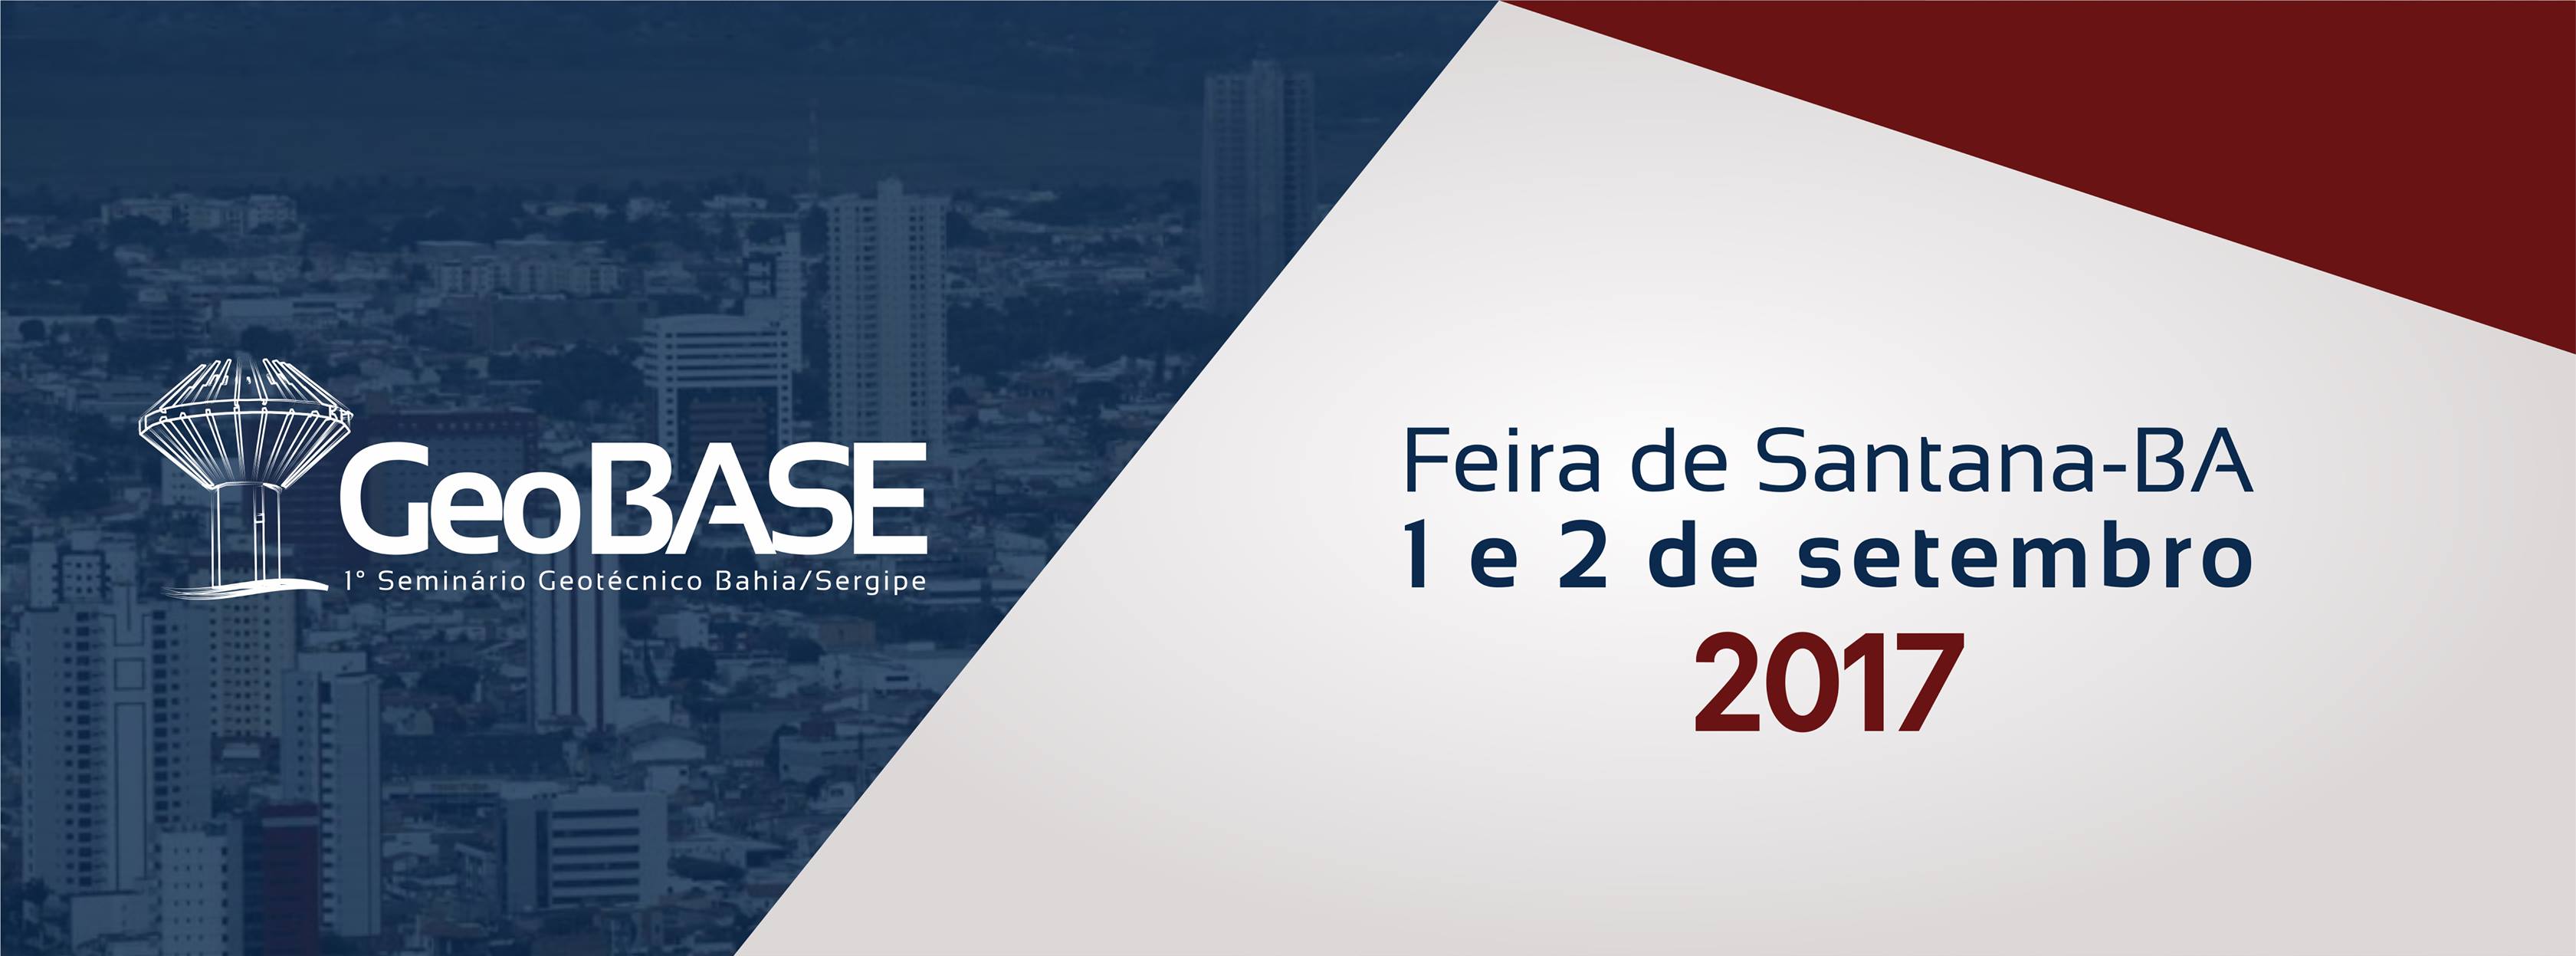 1° Seminário Geotécnico Bahia/Sergipe - GeoBASE 2017